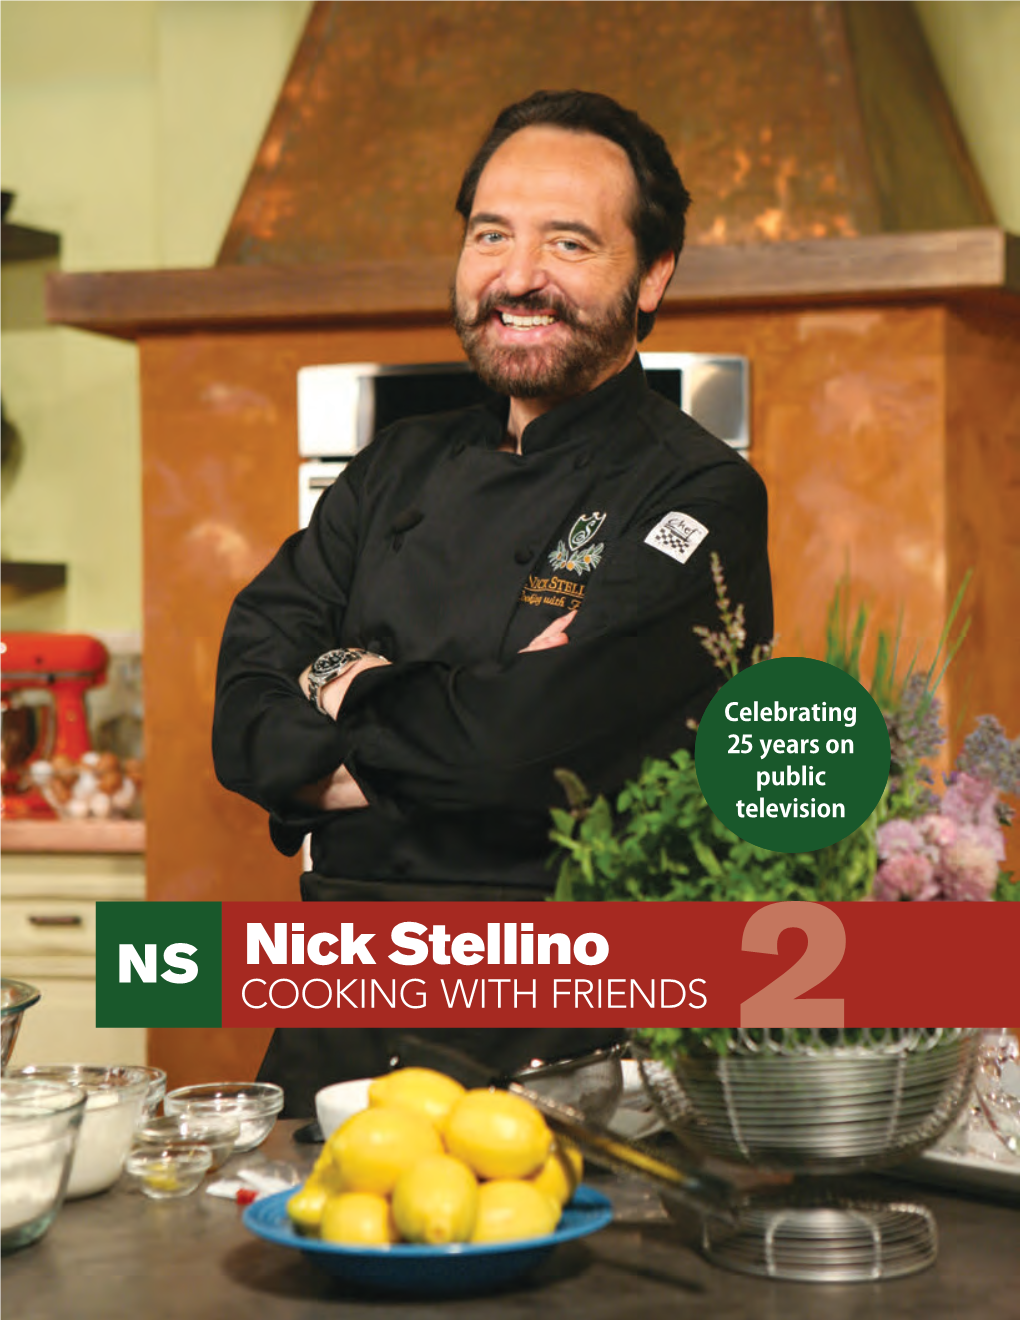 Download Nick Stellino's Ecookbook